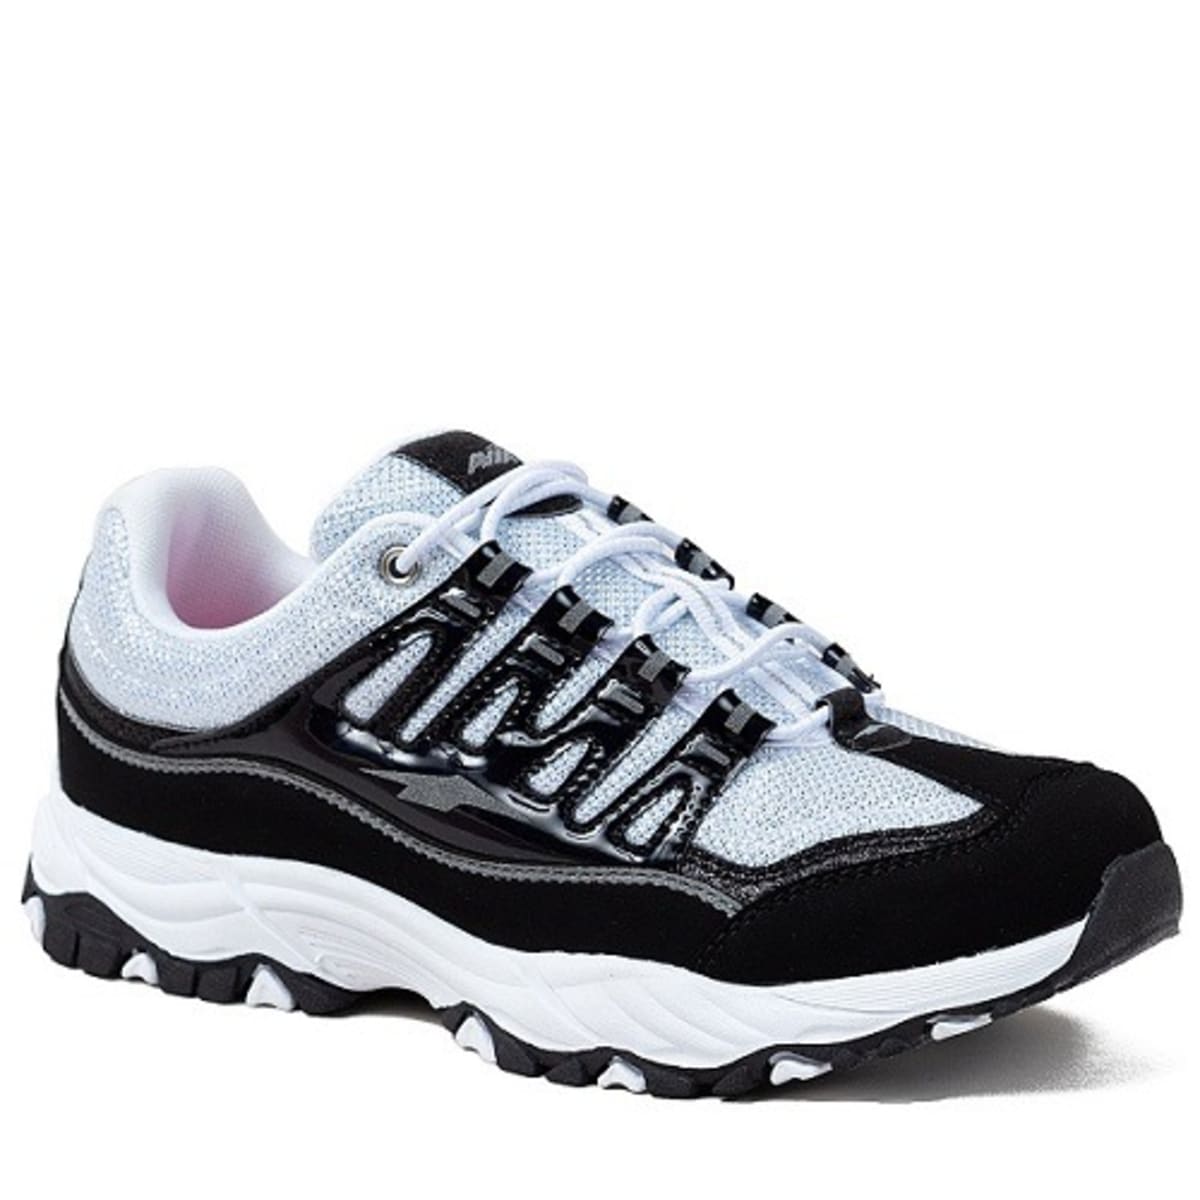 Avia Elevate Retro Athletic Girls Sneaker Shoes - Black Silver